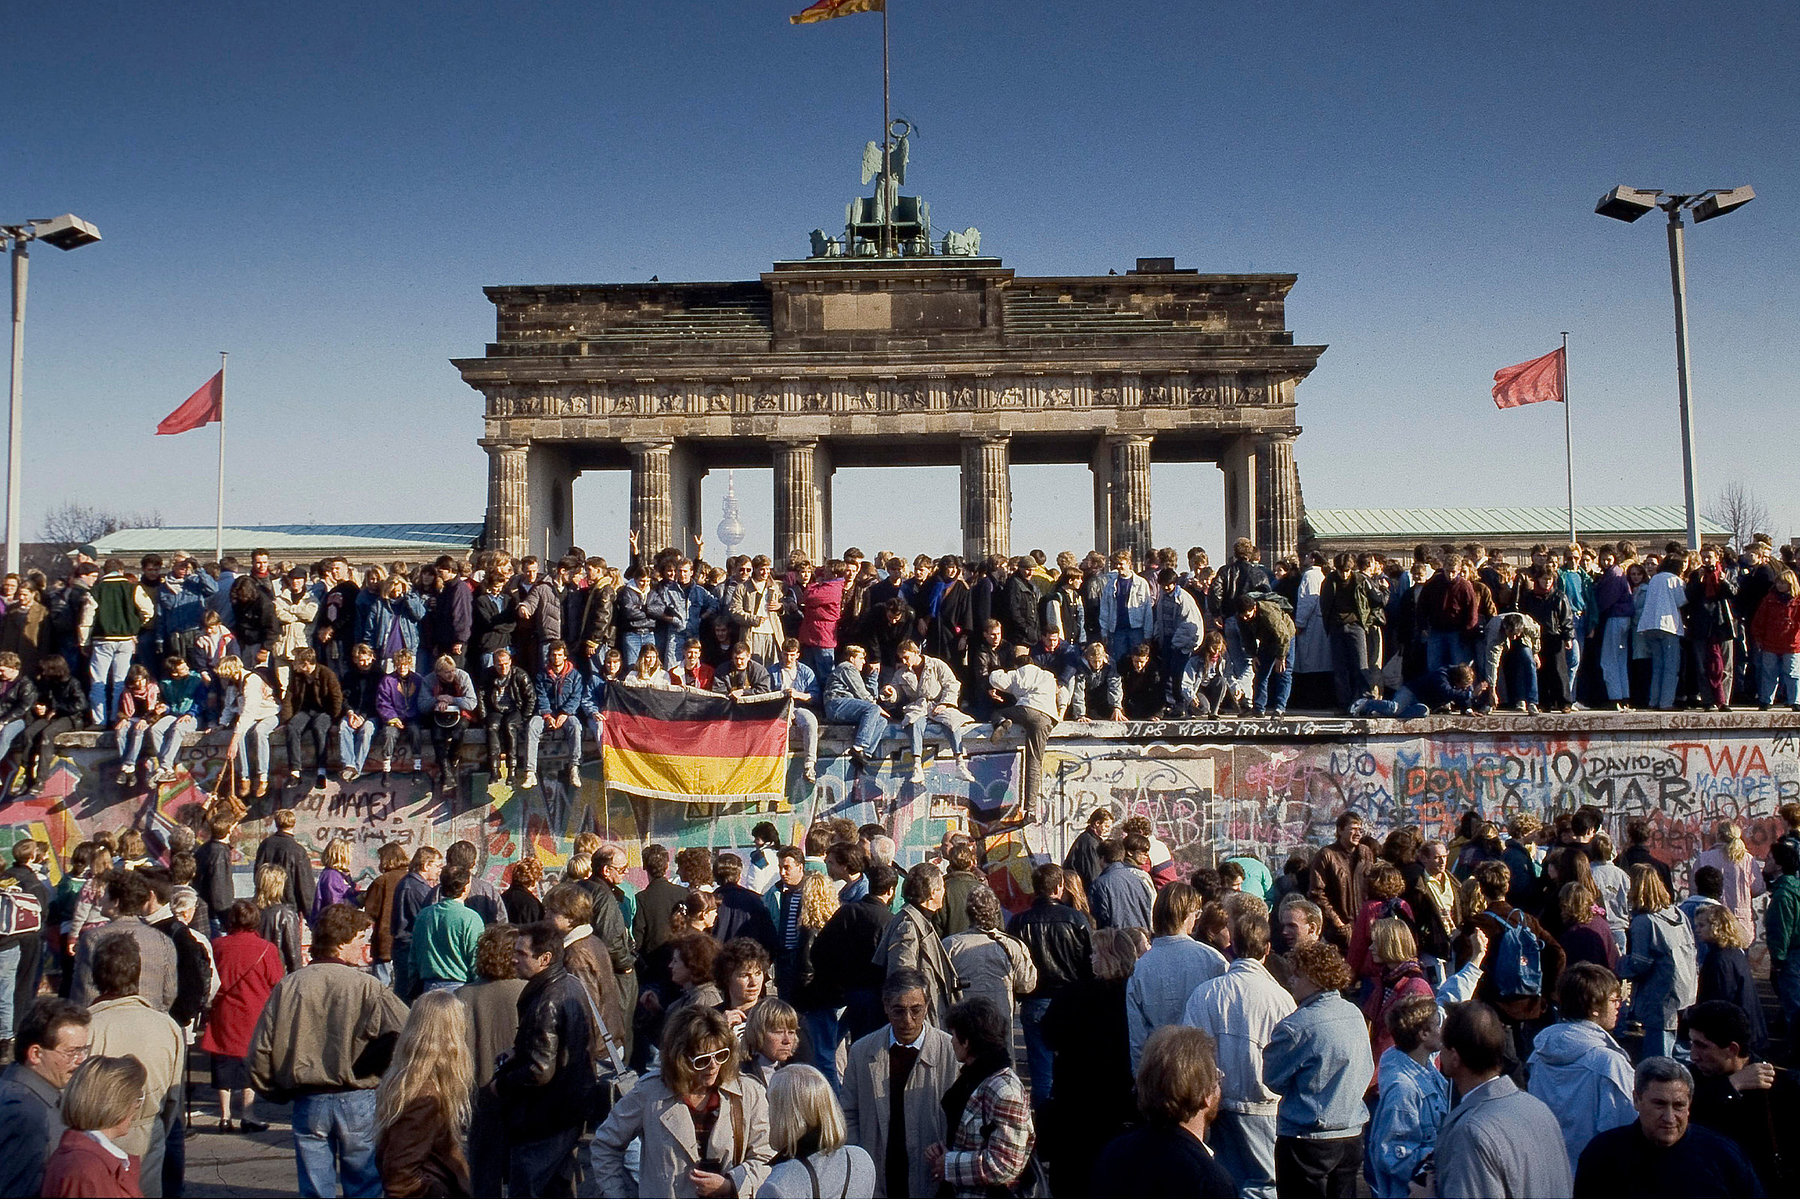 Berlin, Germany – Brandenburg Gate and Berlin Wall